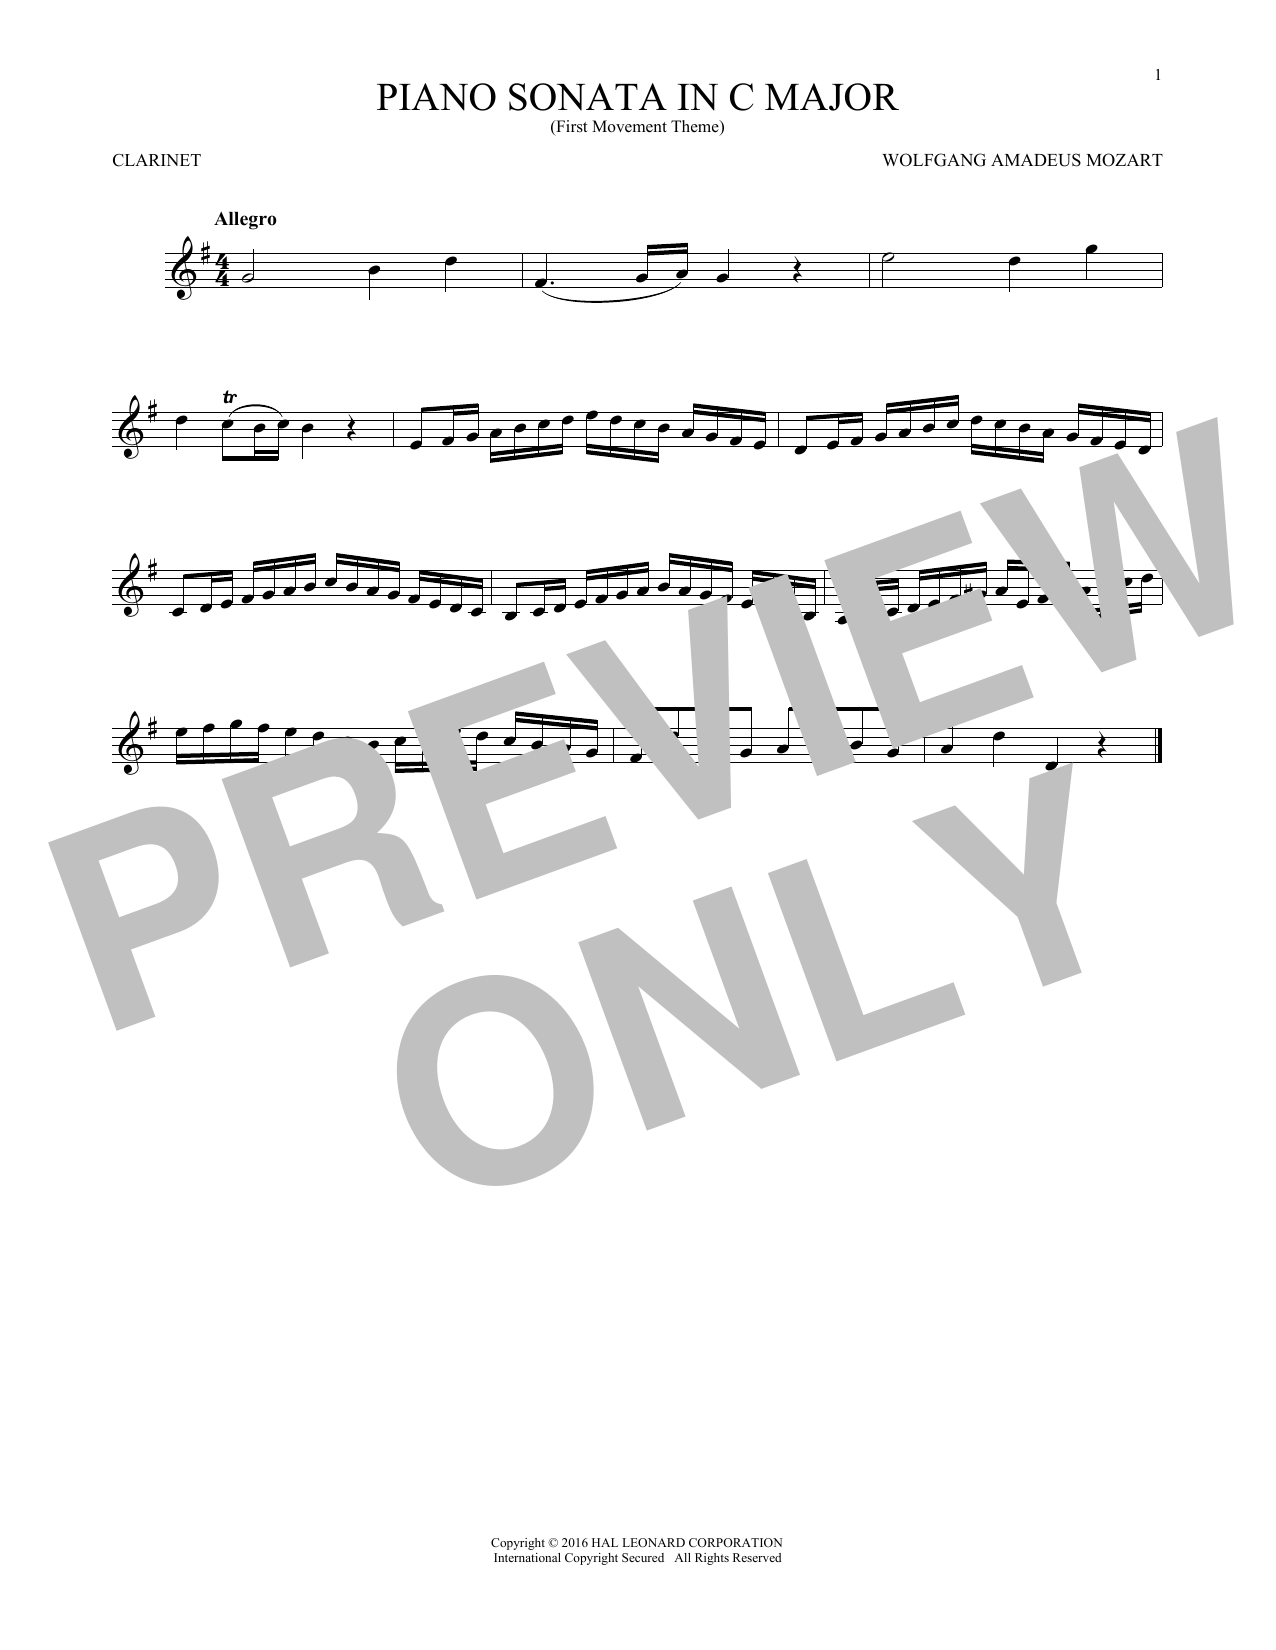 Wolfgang Amadeus Mozart Piano Sonata In C Major Sheet Music Notes & Chords for Viola - Download or Print PDF